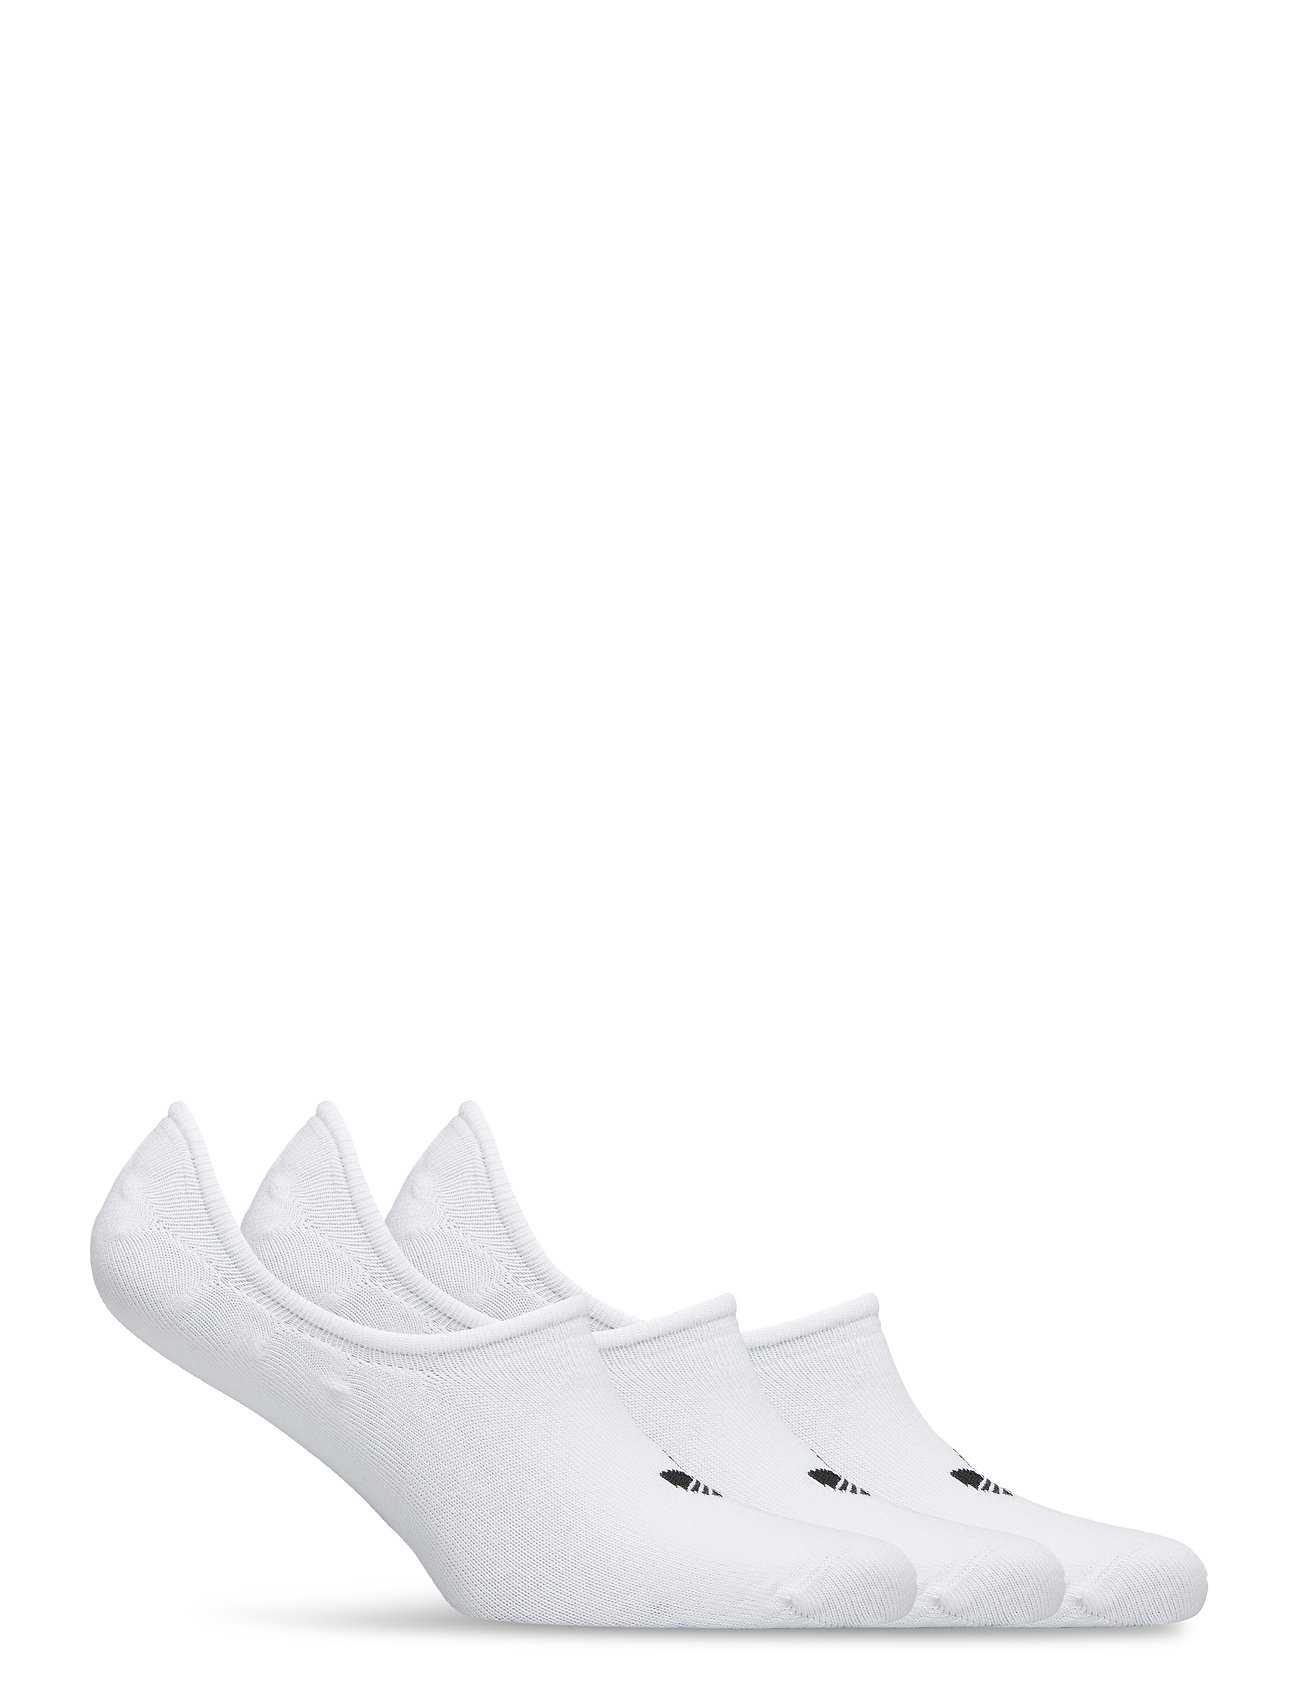 adidas Originals - LOW CUT SOCK 3 PAIR PACK - strümpfe - white - 1